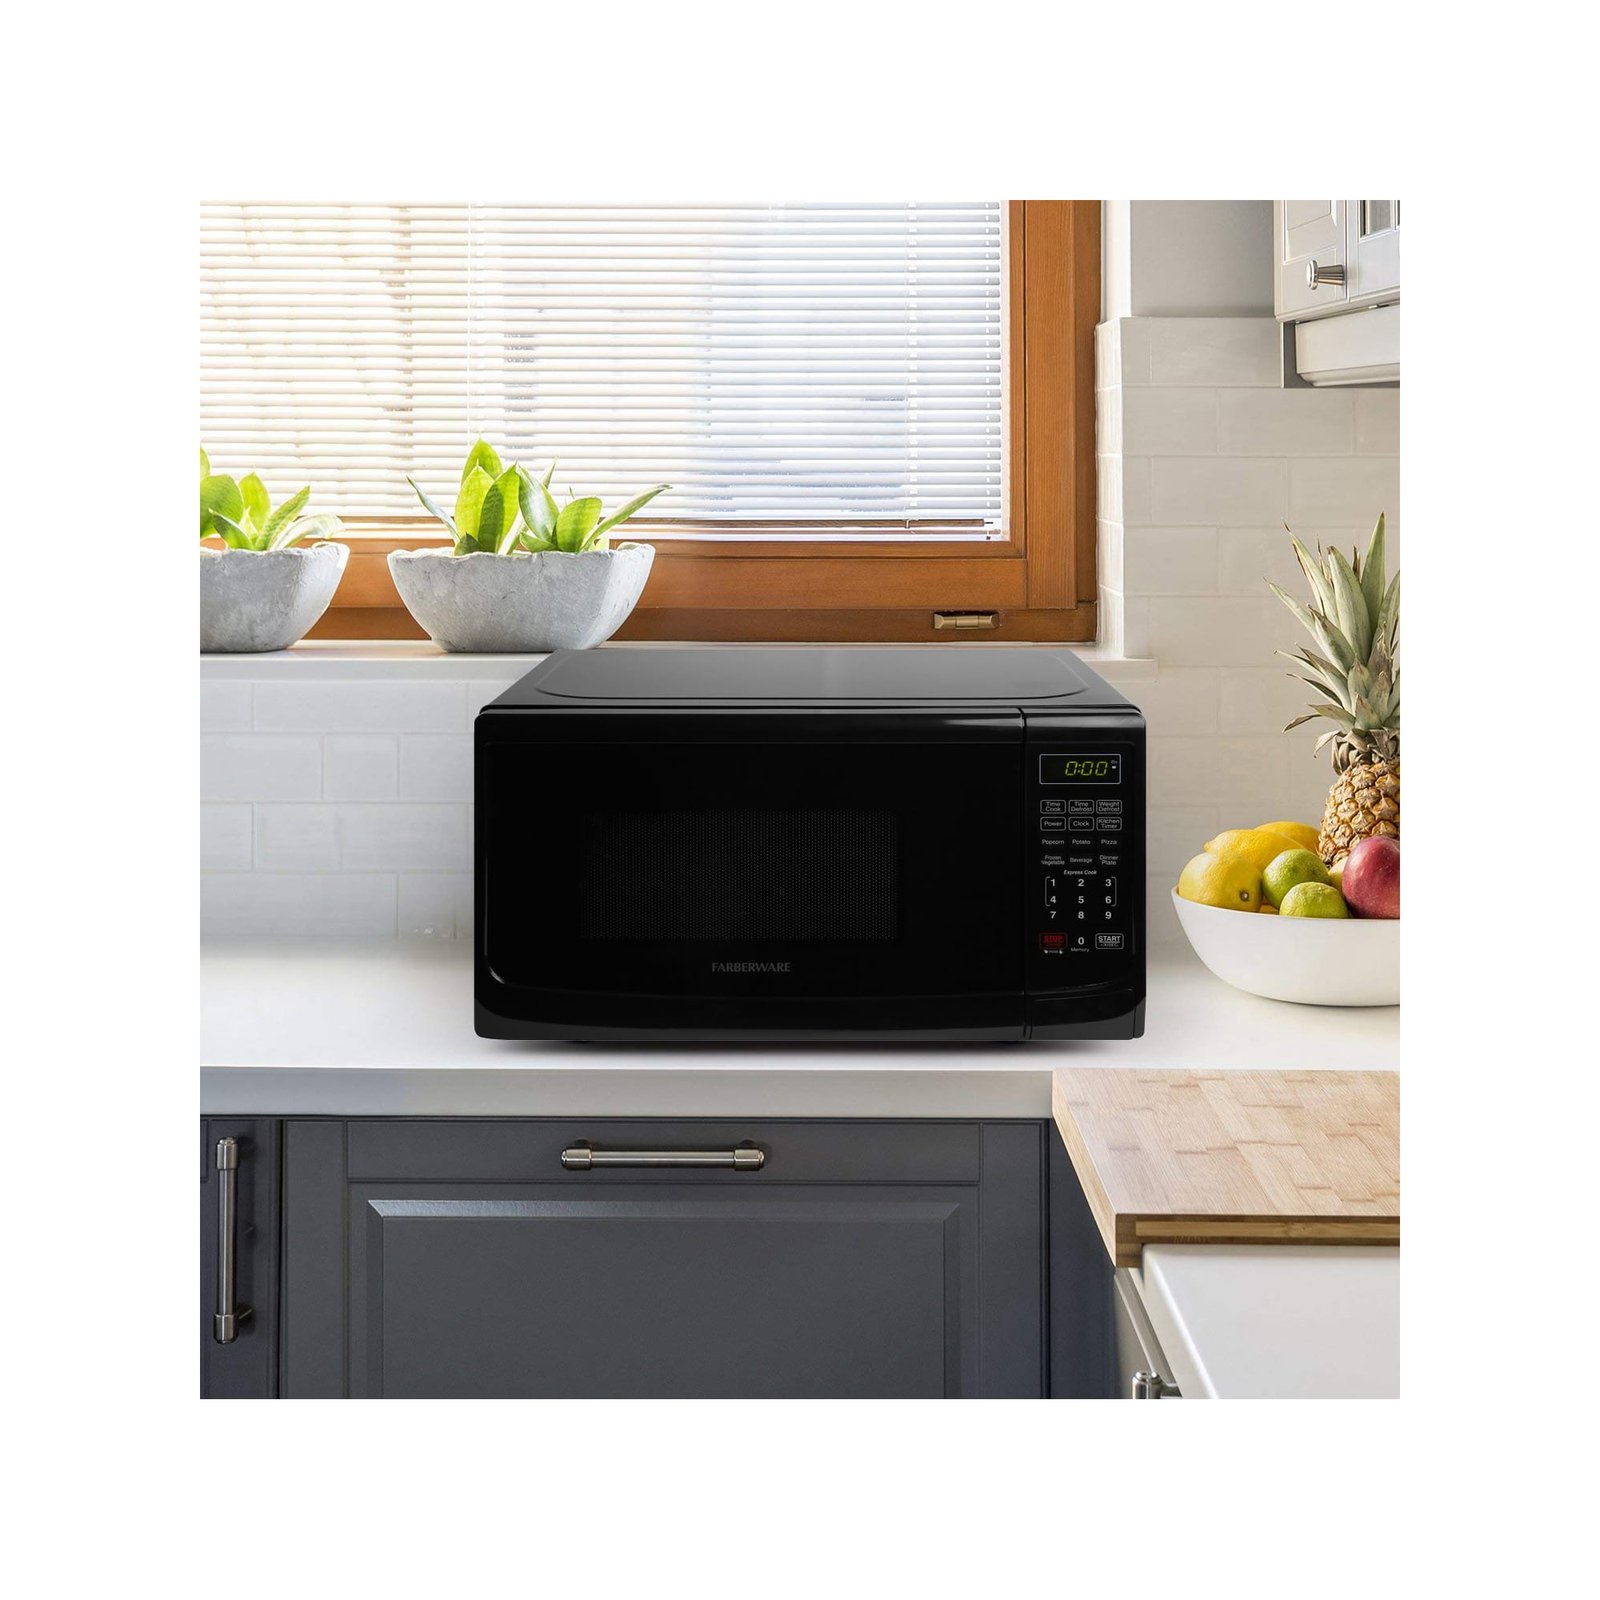 https://themarketdepot.com/wp-content/uploads/2023/01/Farberware-Classic-0.7-cu.-ft.-700W-Microwave-Oven-Black-6.jpeg